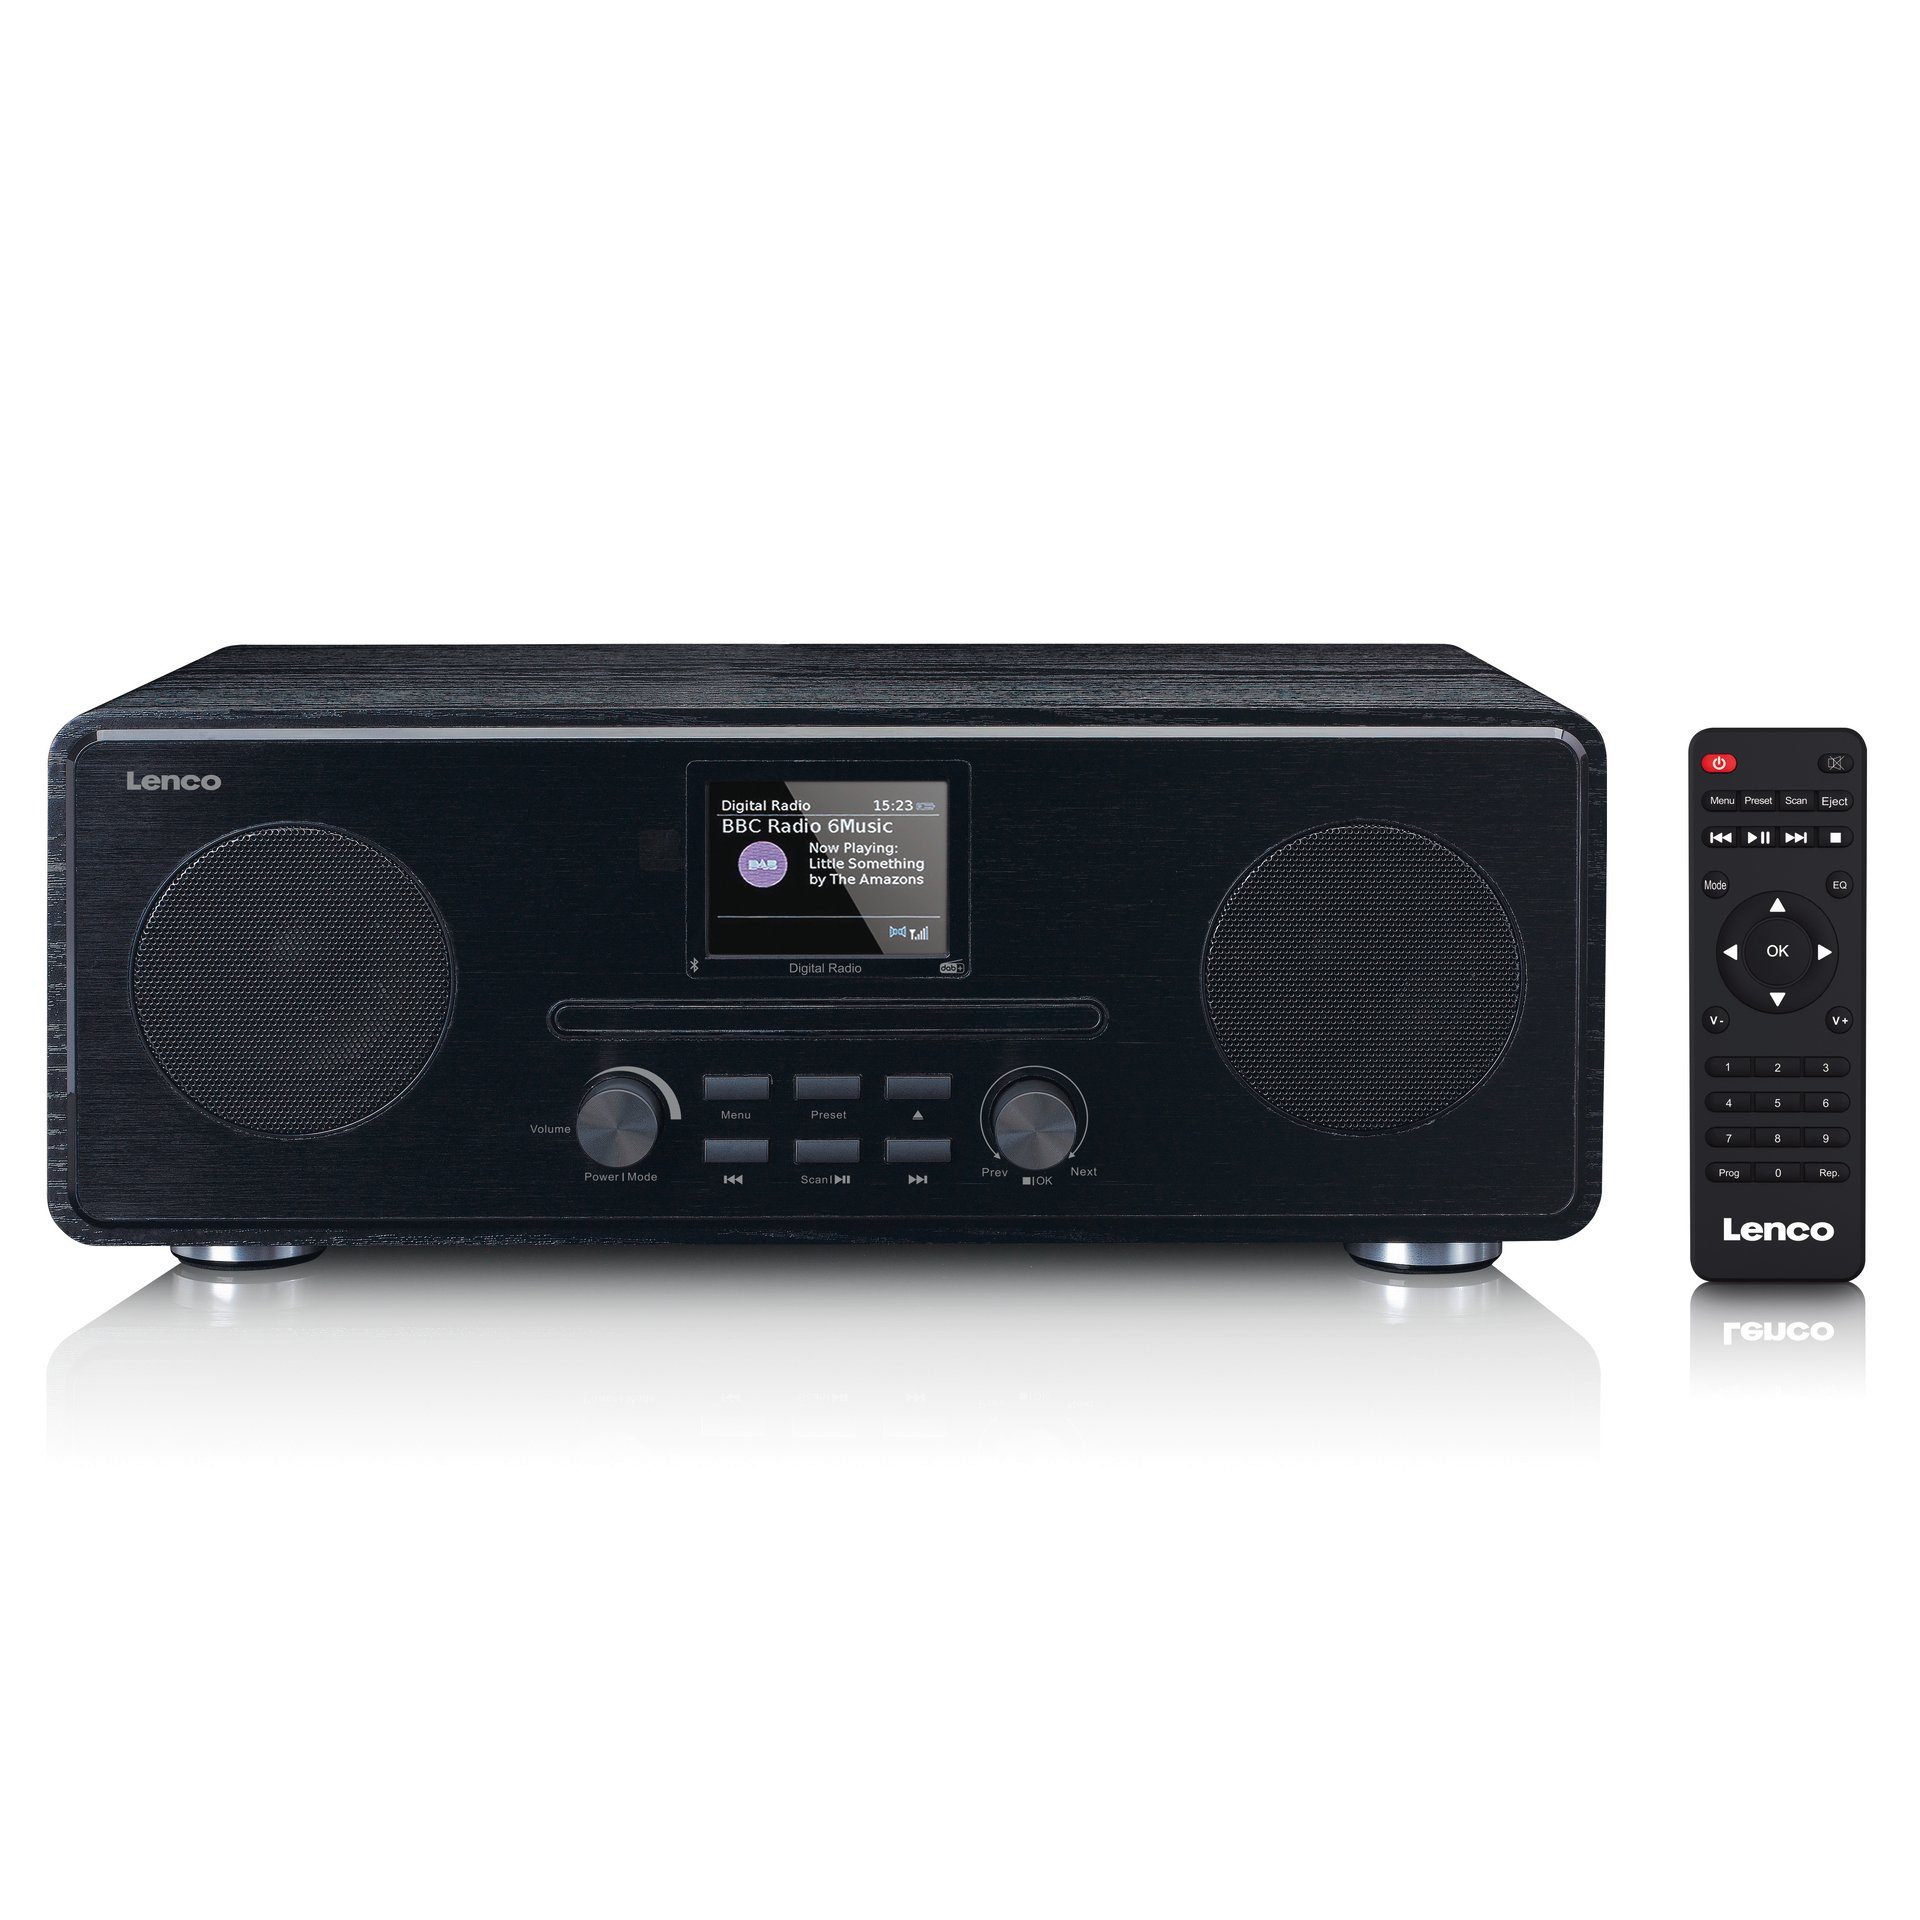 Lenco Player, CD, MP3 mit (FM-Tuner) Digitalradio DAB+, Radio BT, FM (DAB) RC